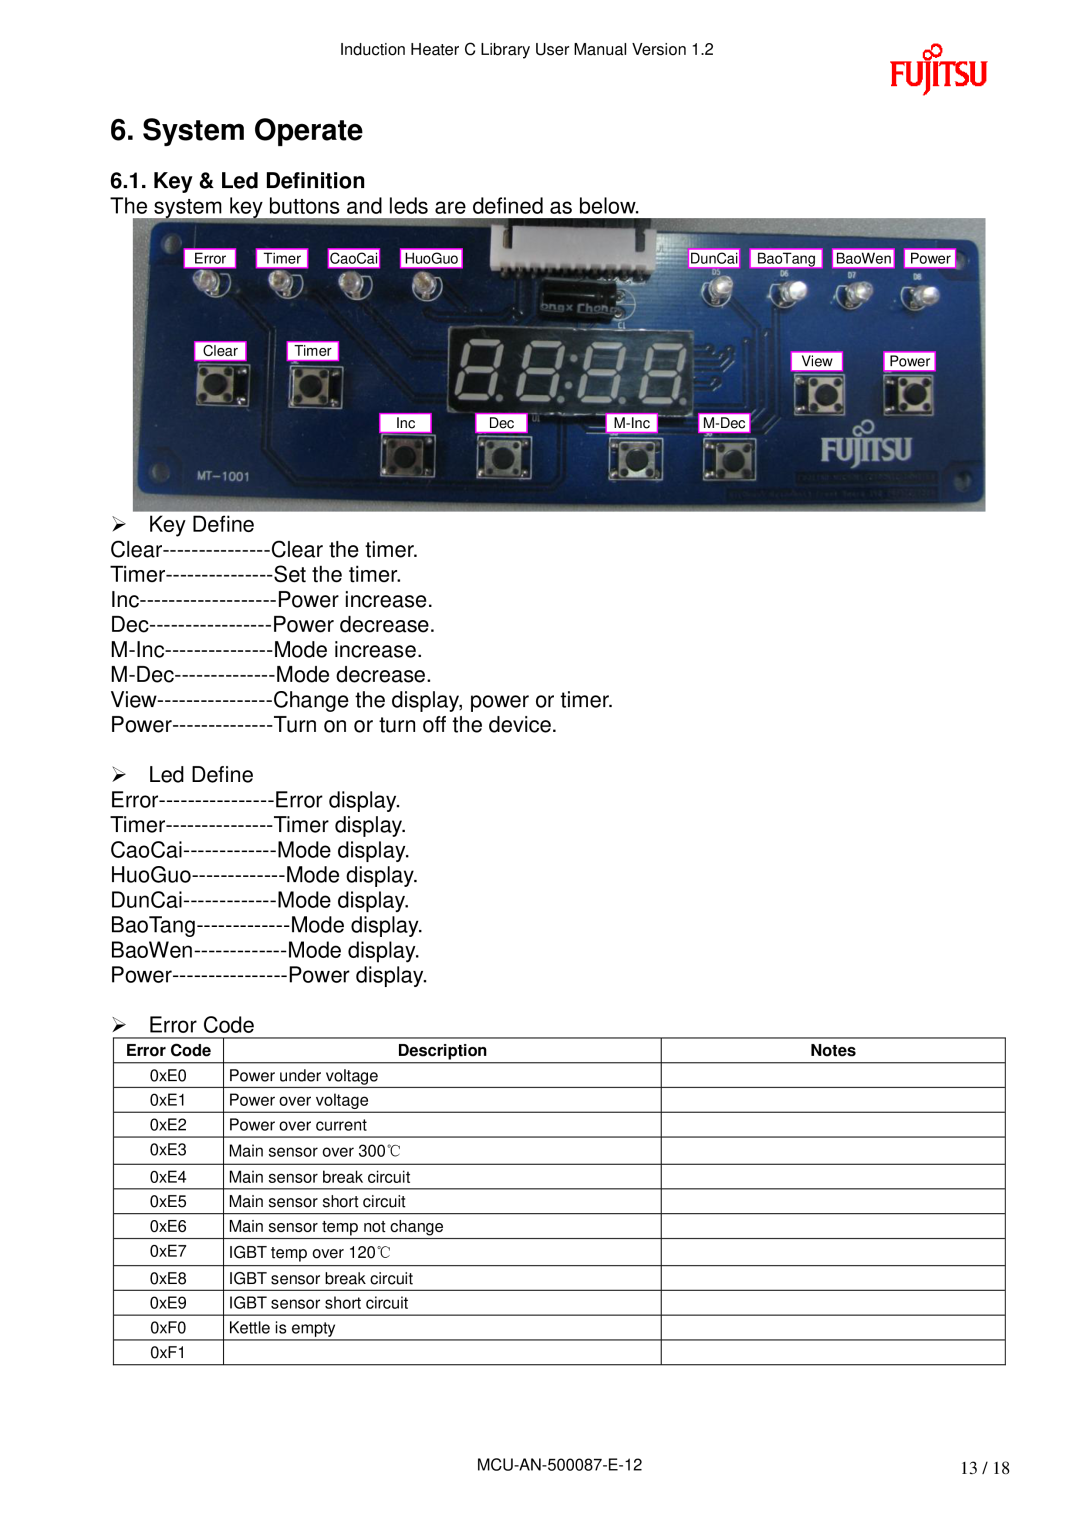 Fujitsu MB95F430 user manual System Operate, Key & Led Definition 